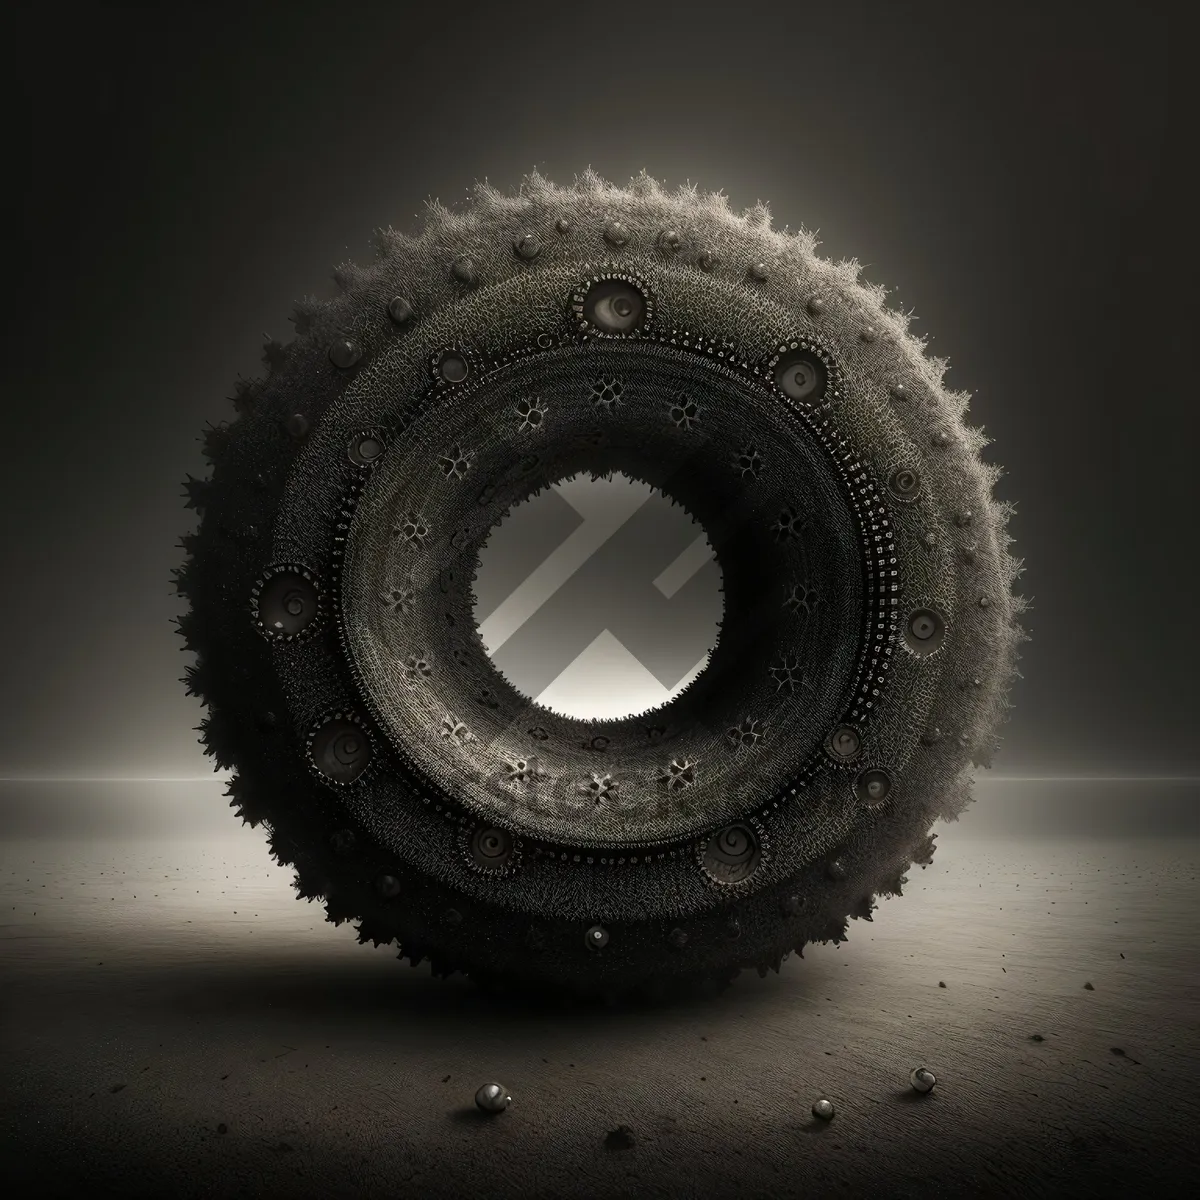 Picture of Industrial Gear Mechanism: Powerful Steel Machinery Wheel